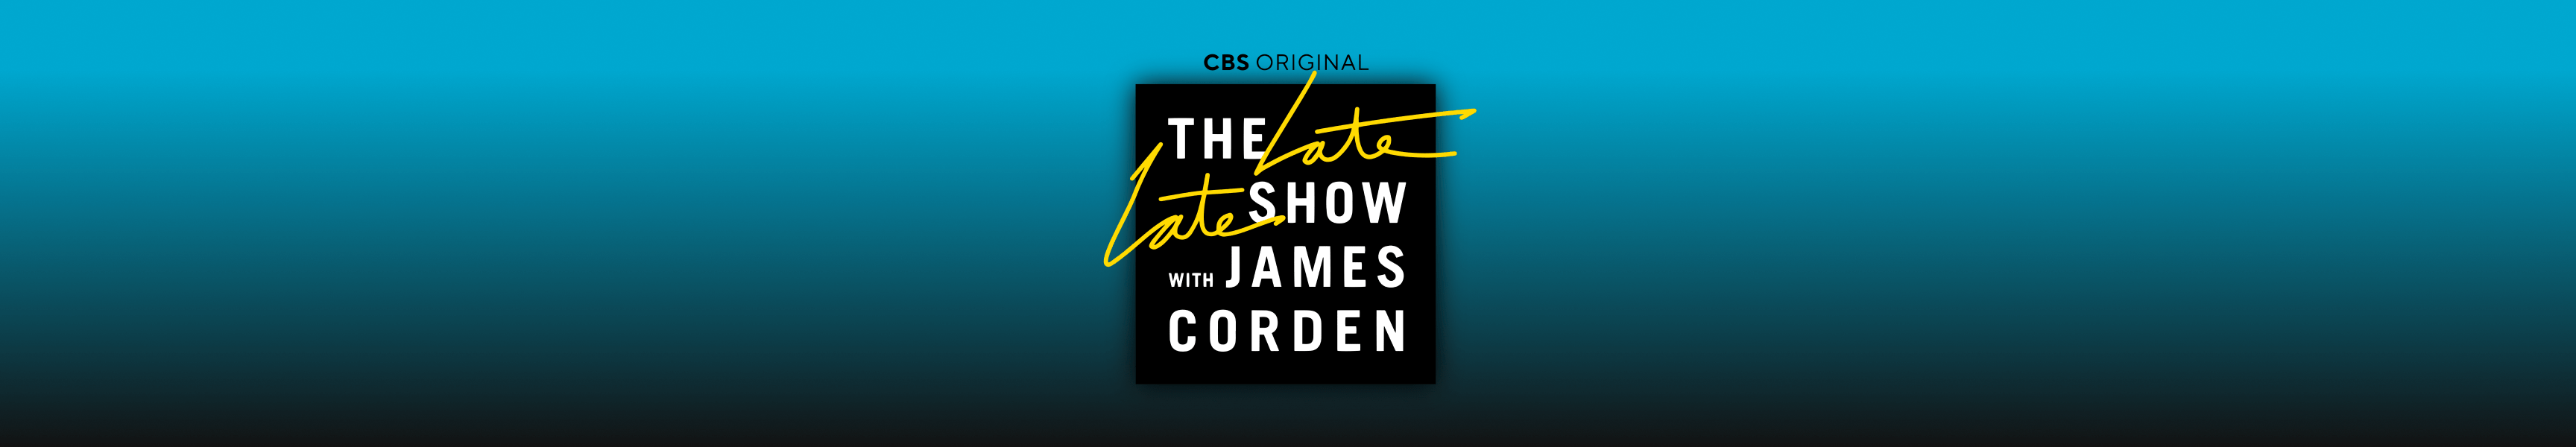 Late Late Show avec James Corden